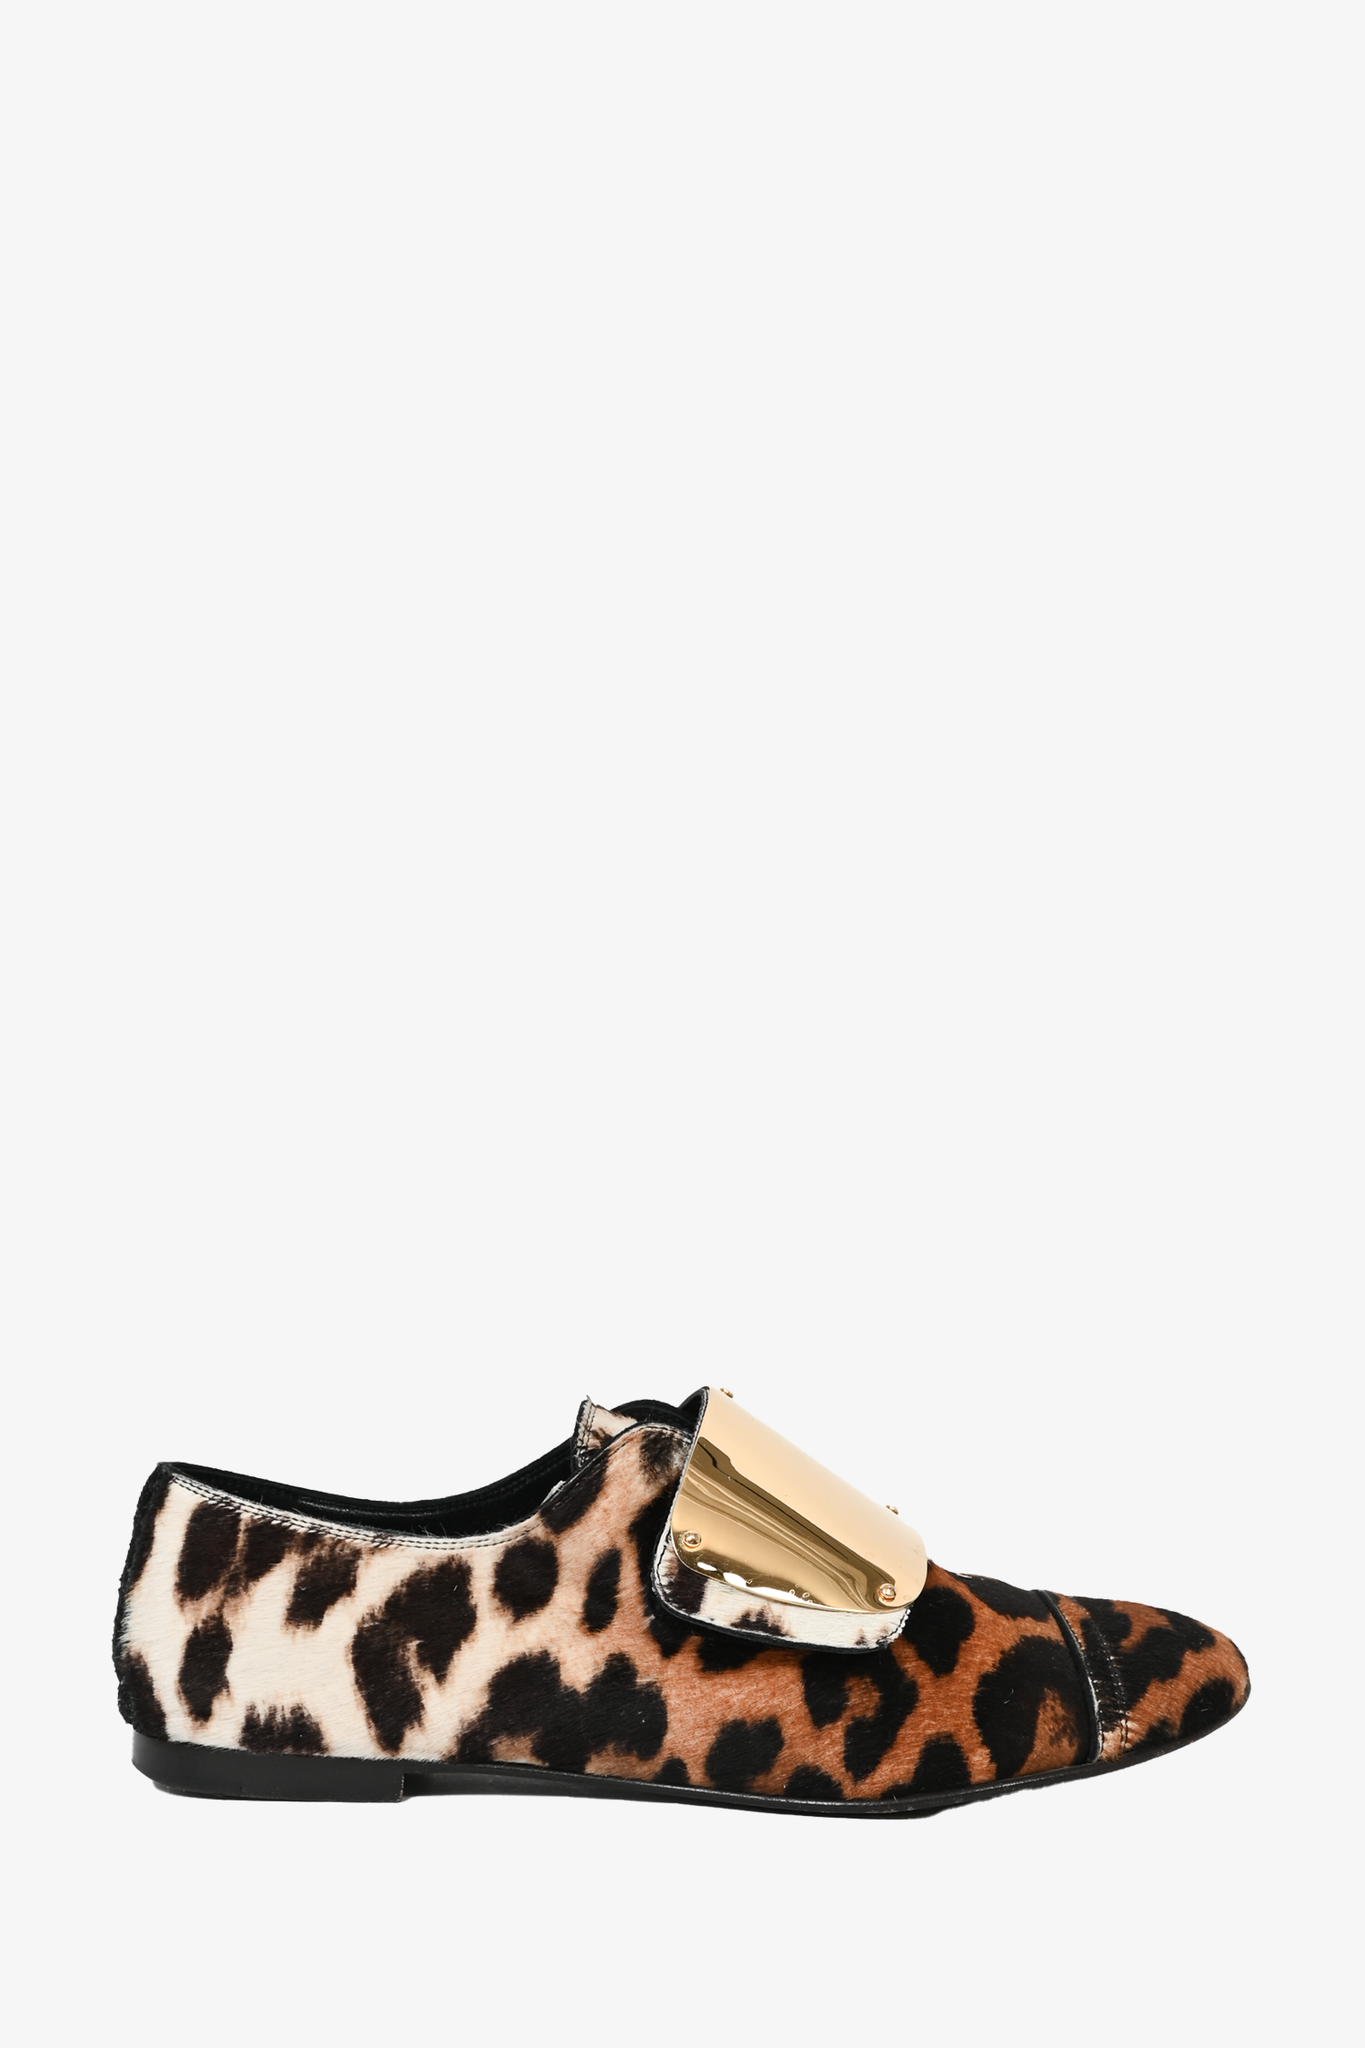 Jimmy Choo Leopard Print Pony Hair GHW Loafers Size 38